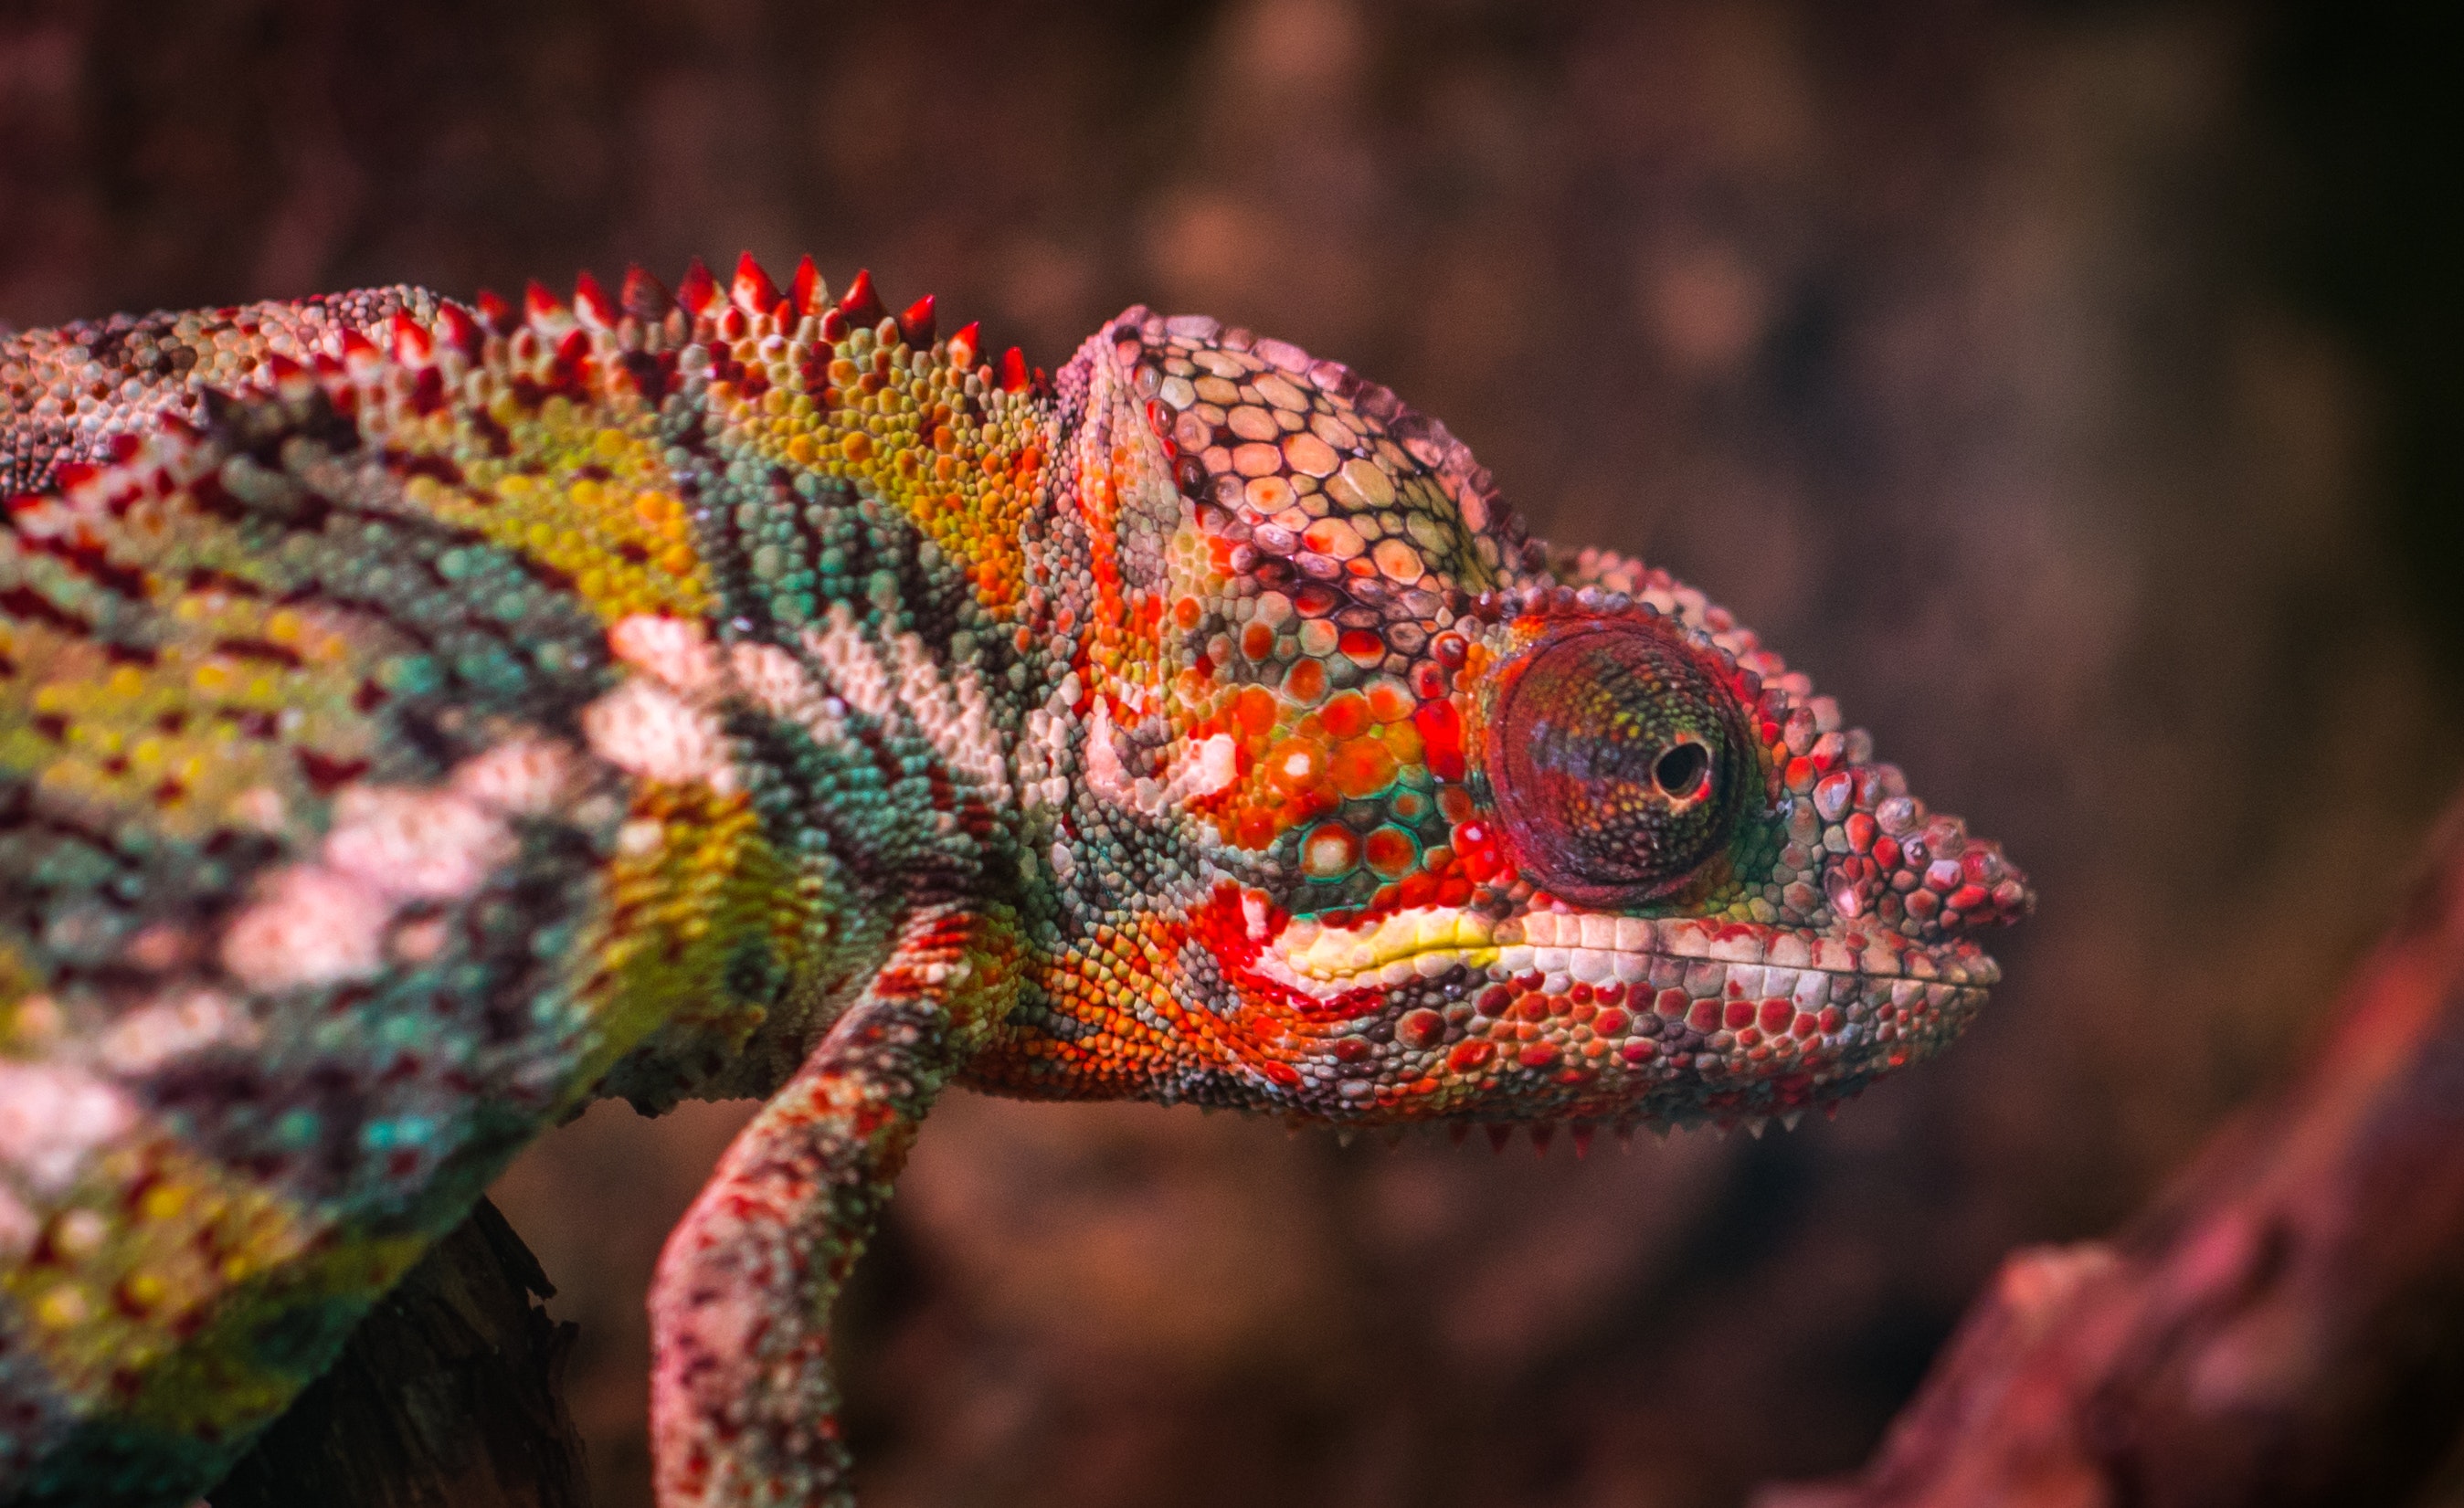 A photo of a iguana.